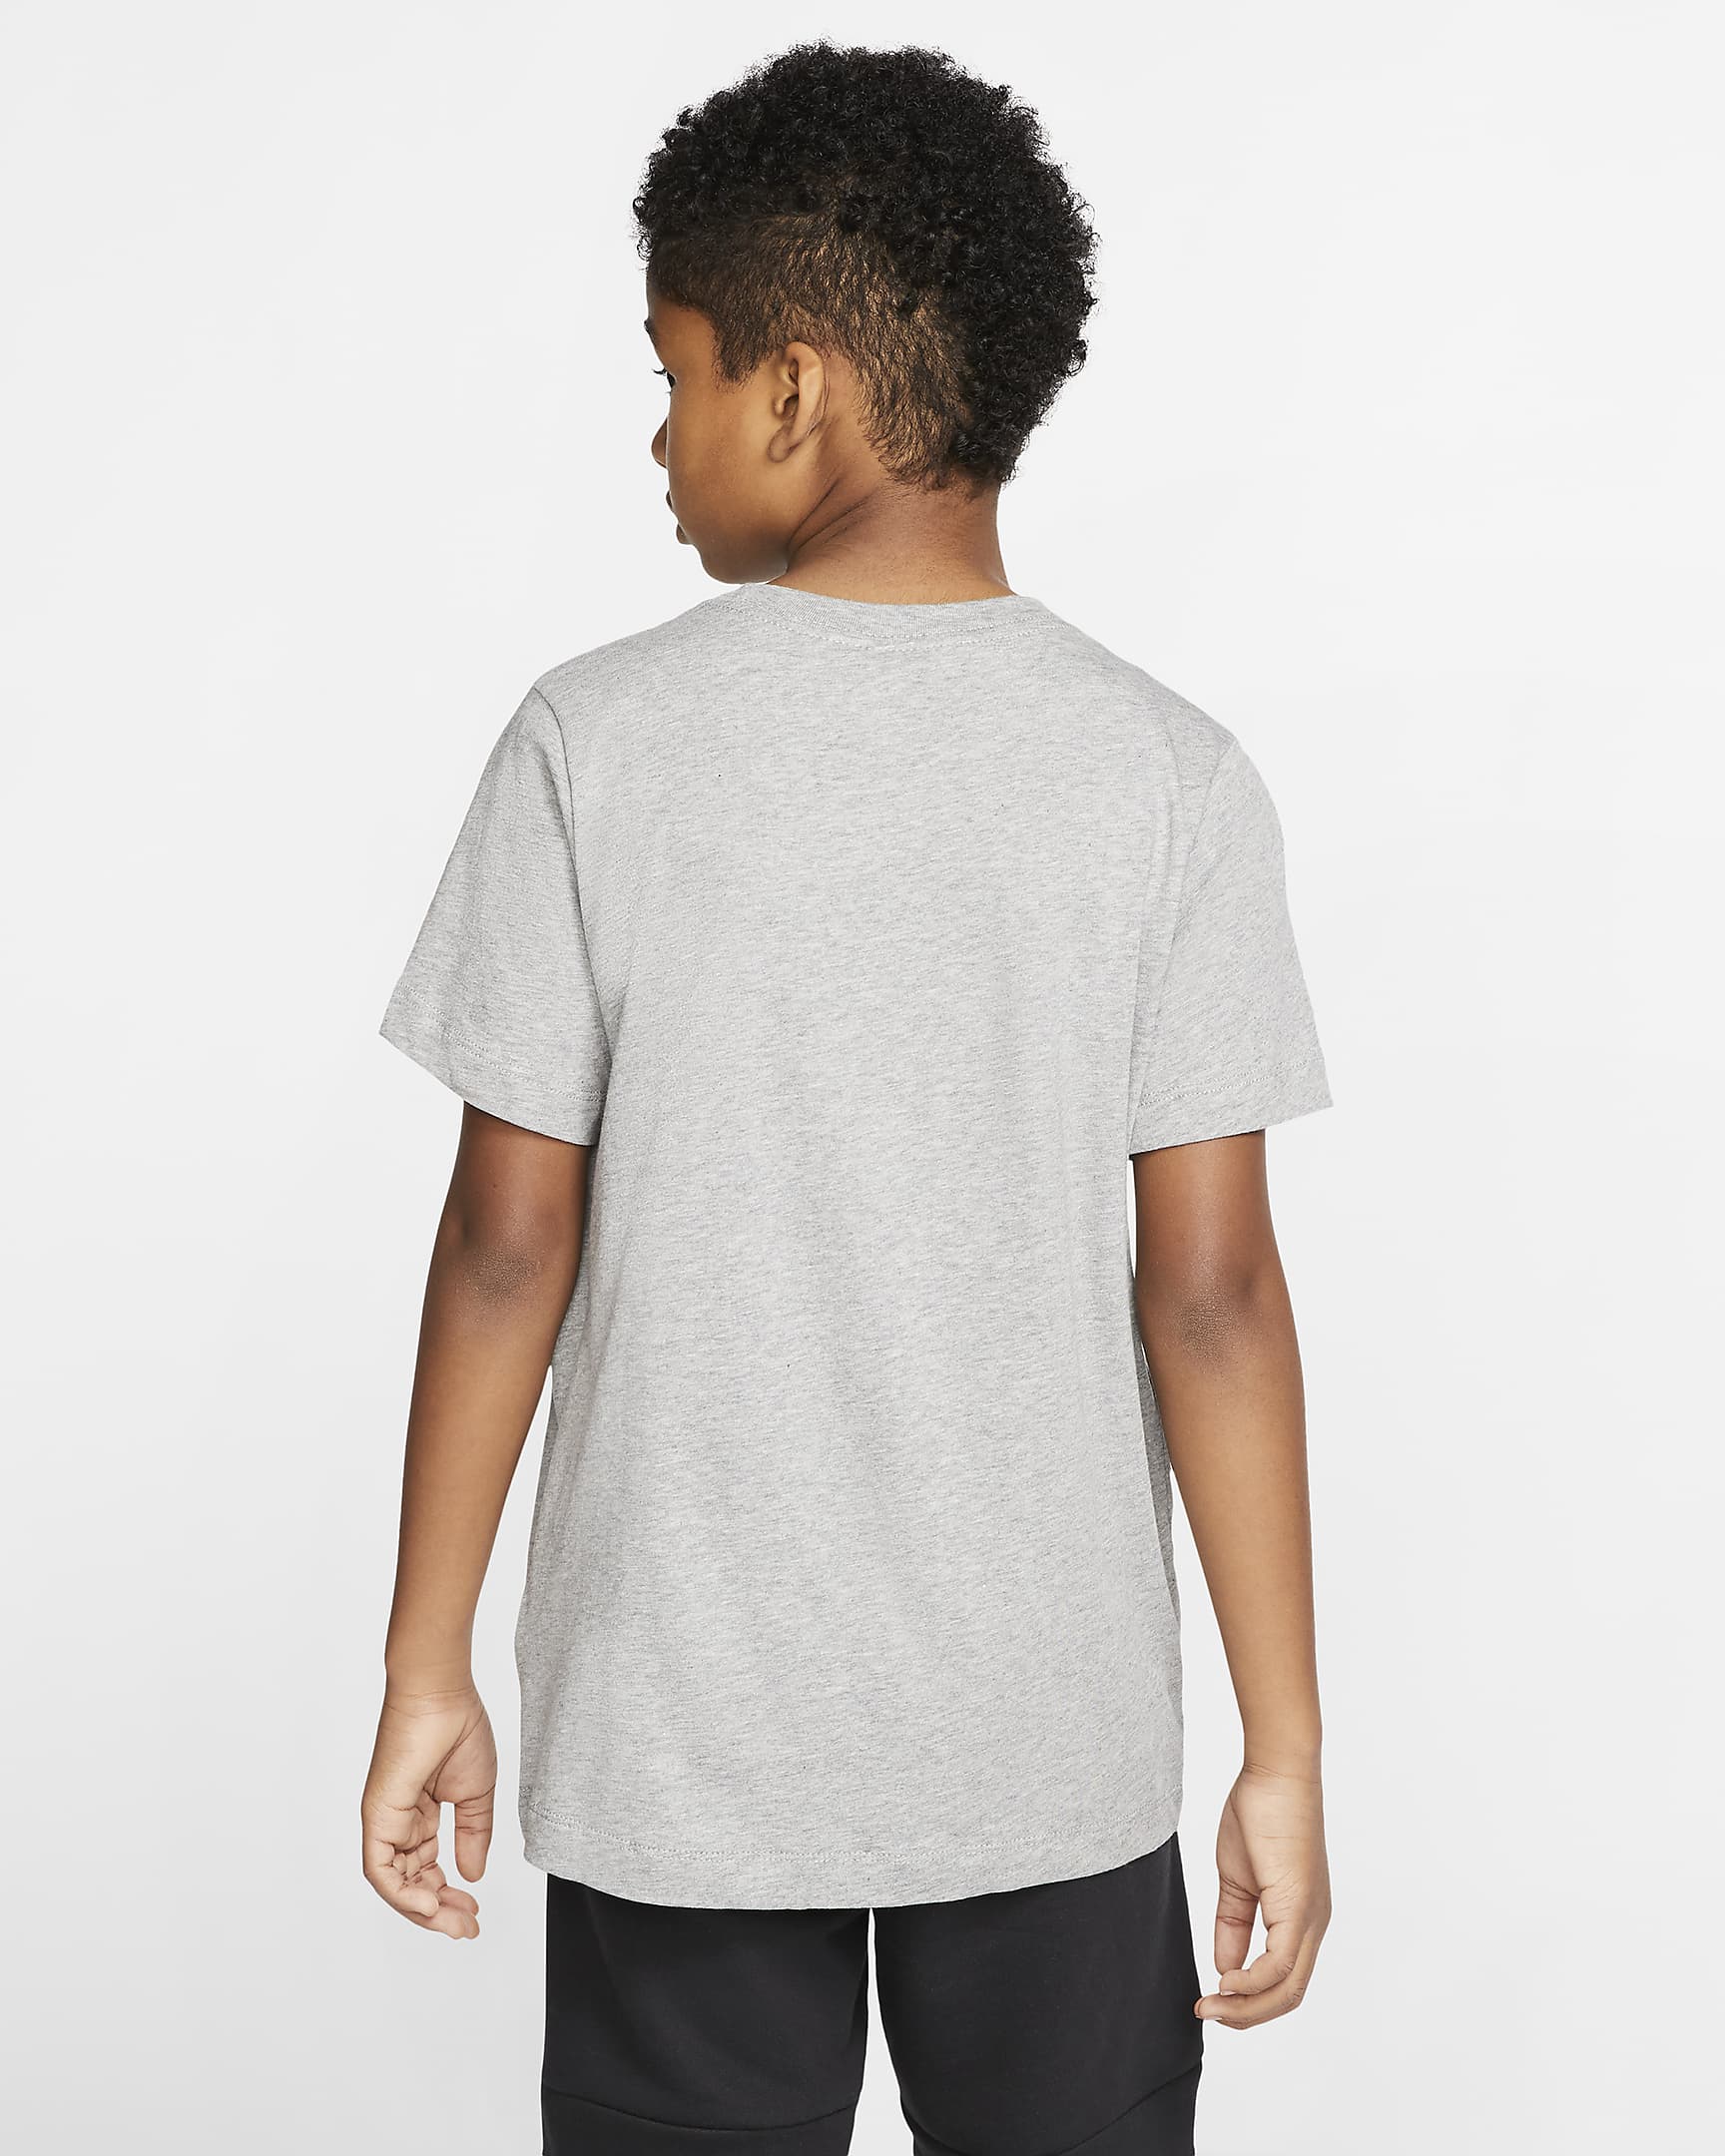 Nike Air Older Kids' (Boys') T-Shirt. Nike RO